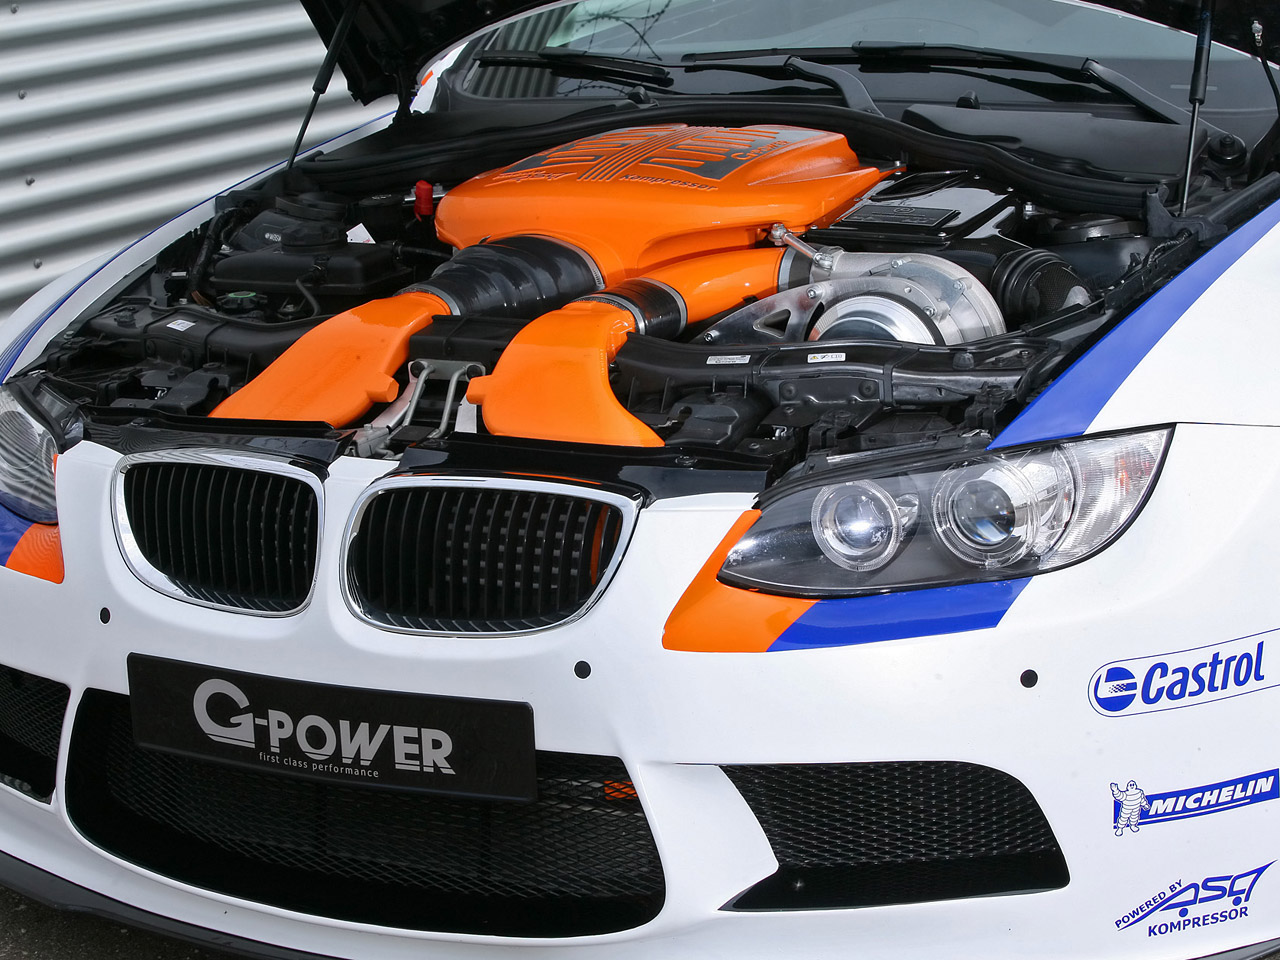 2010 G-Power M3 GT2 S